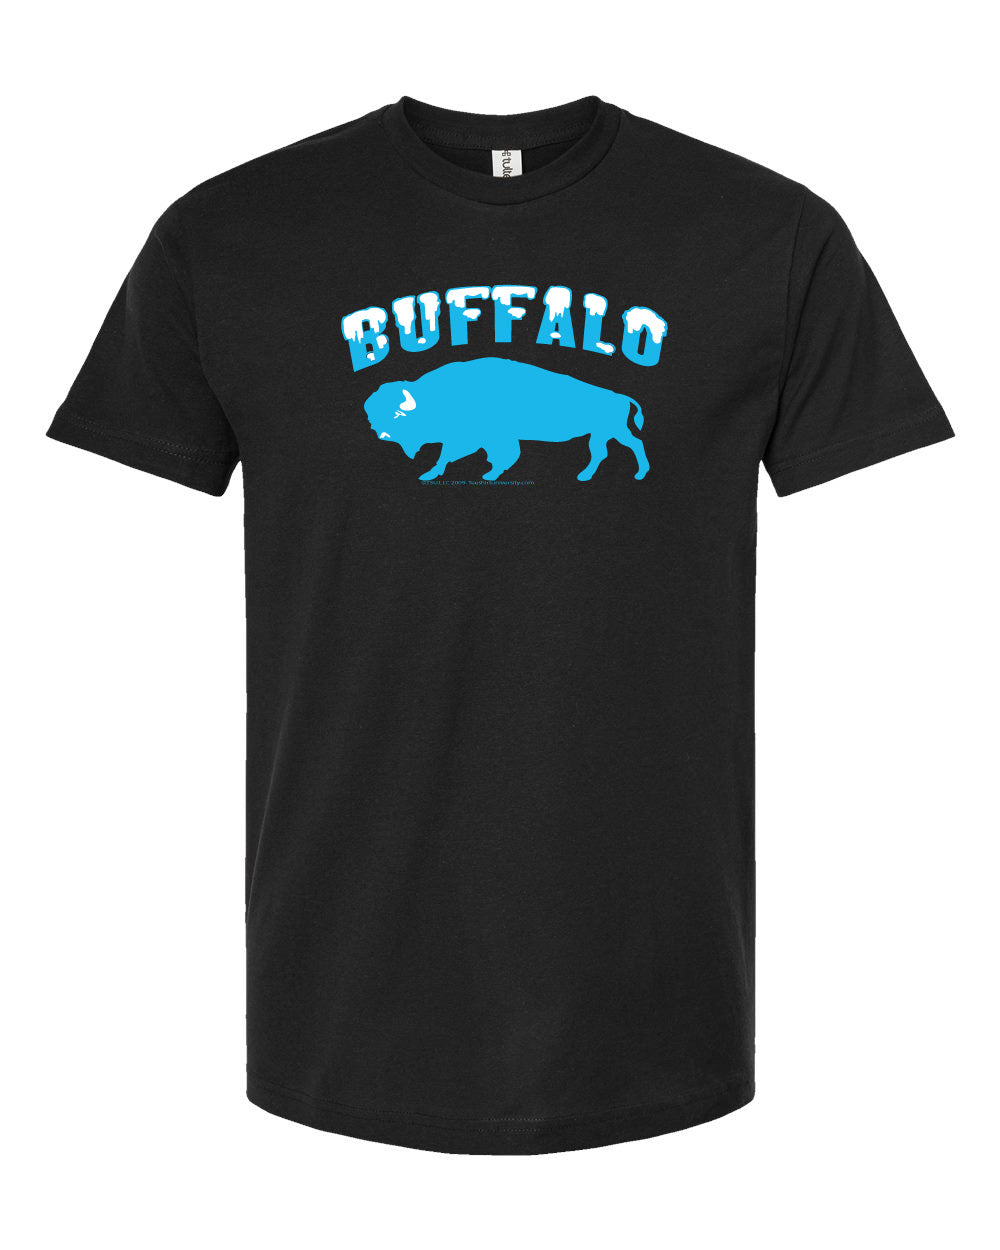 BuffalosnowT-shirt.jpg